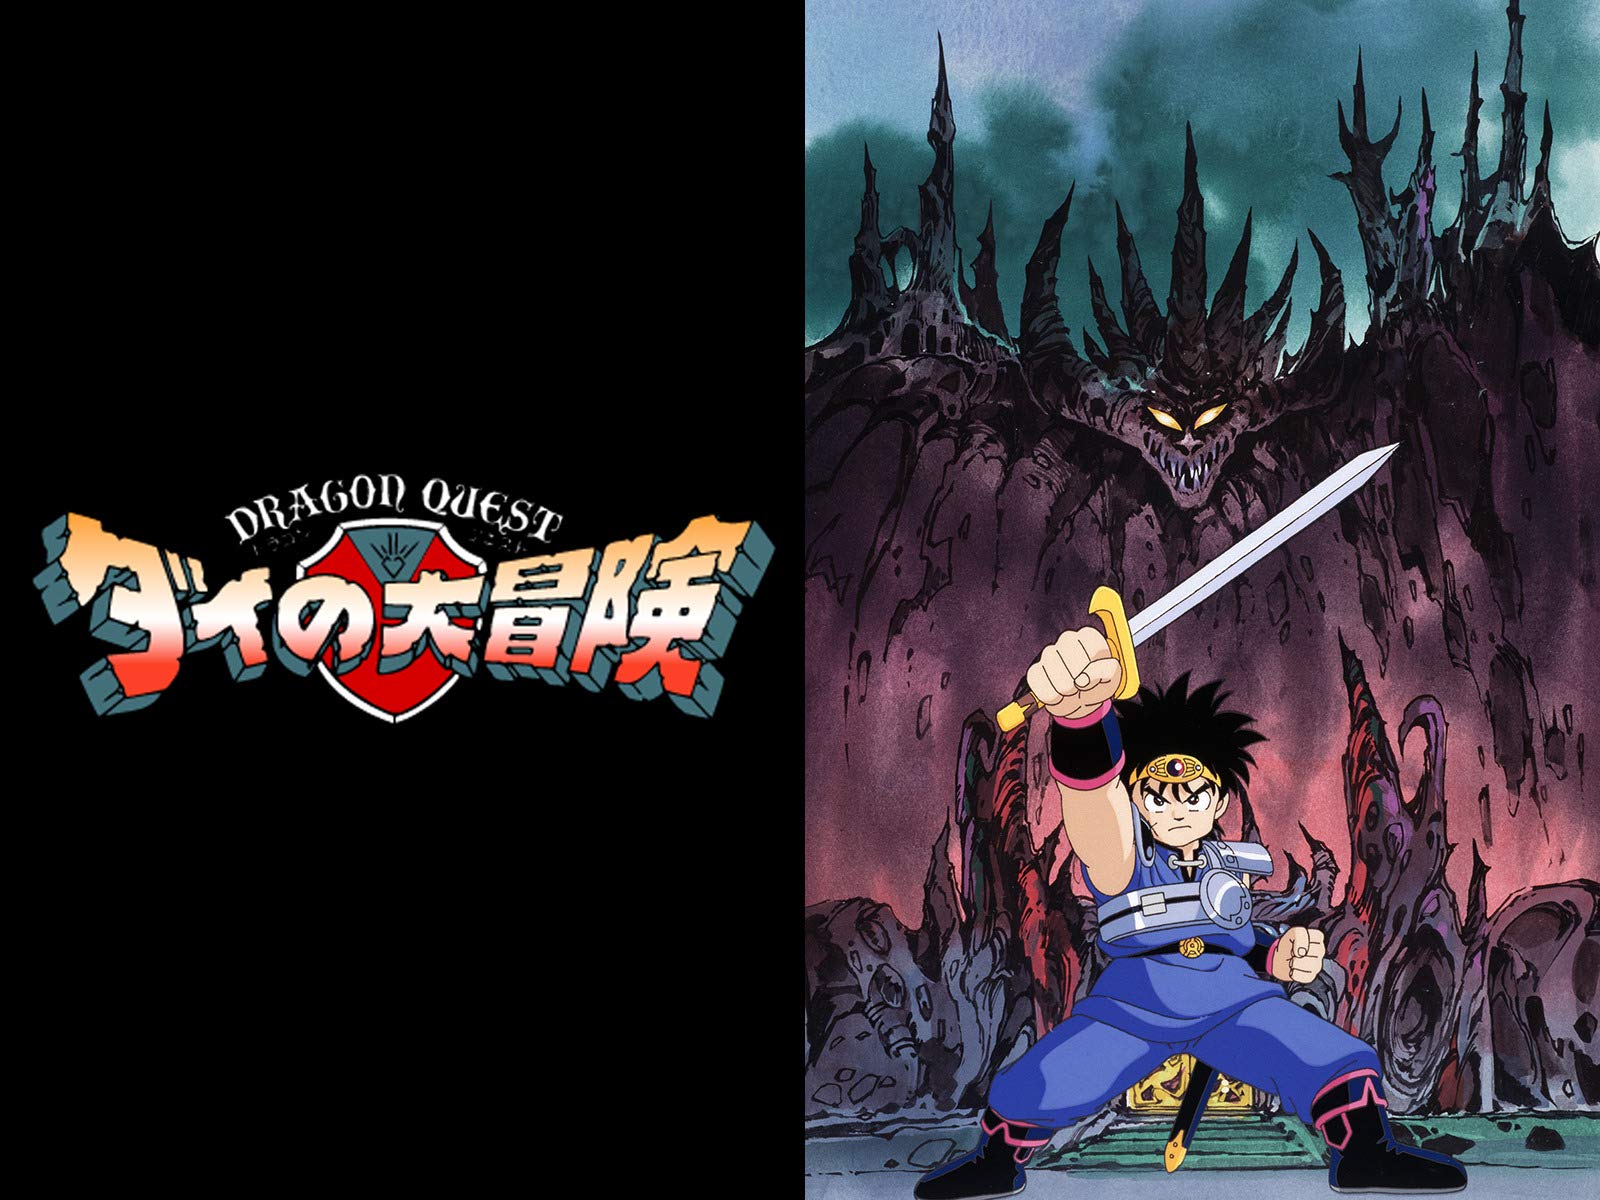 Dragon Quest: The Adventure of Dai (TV series)